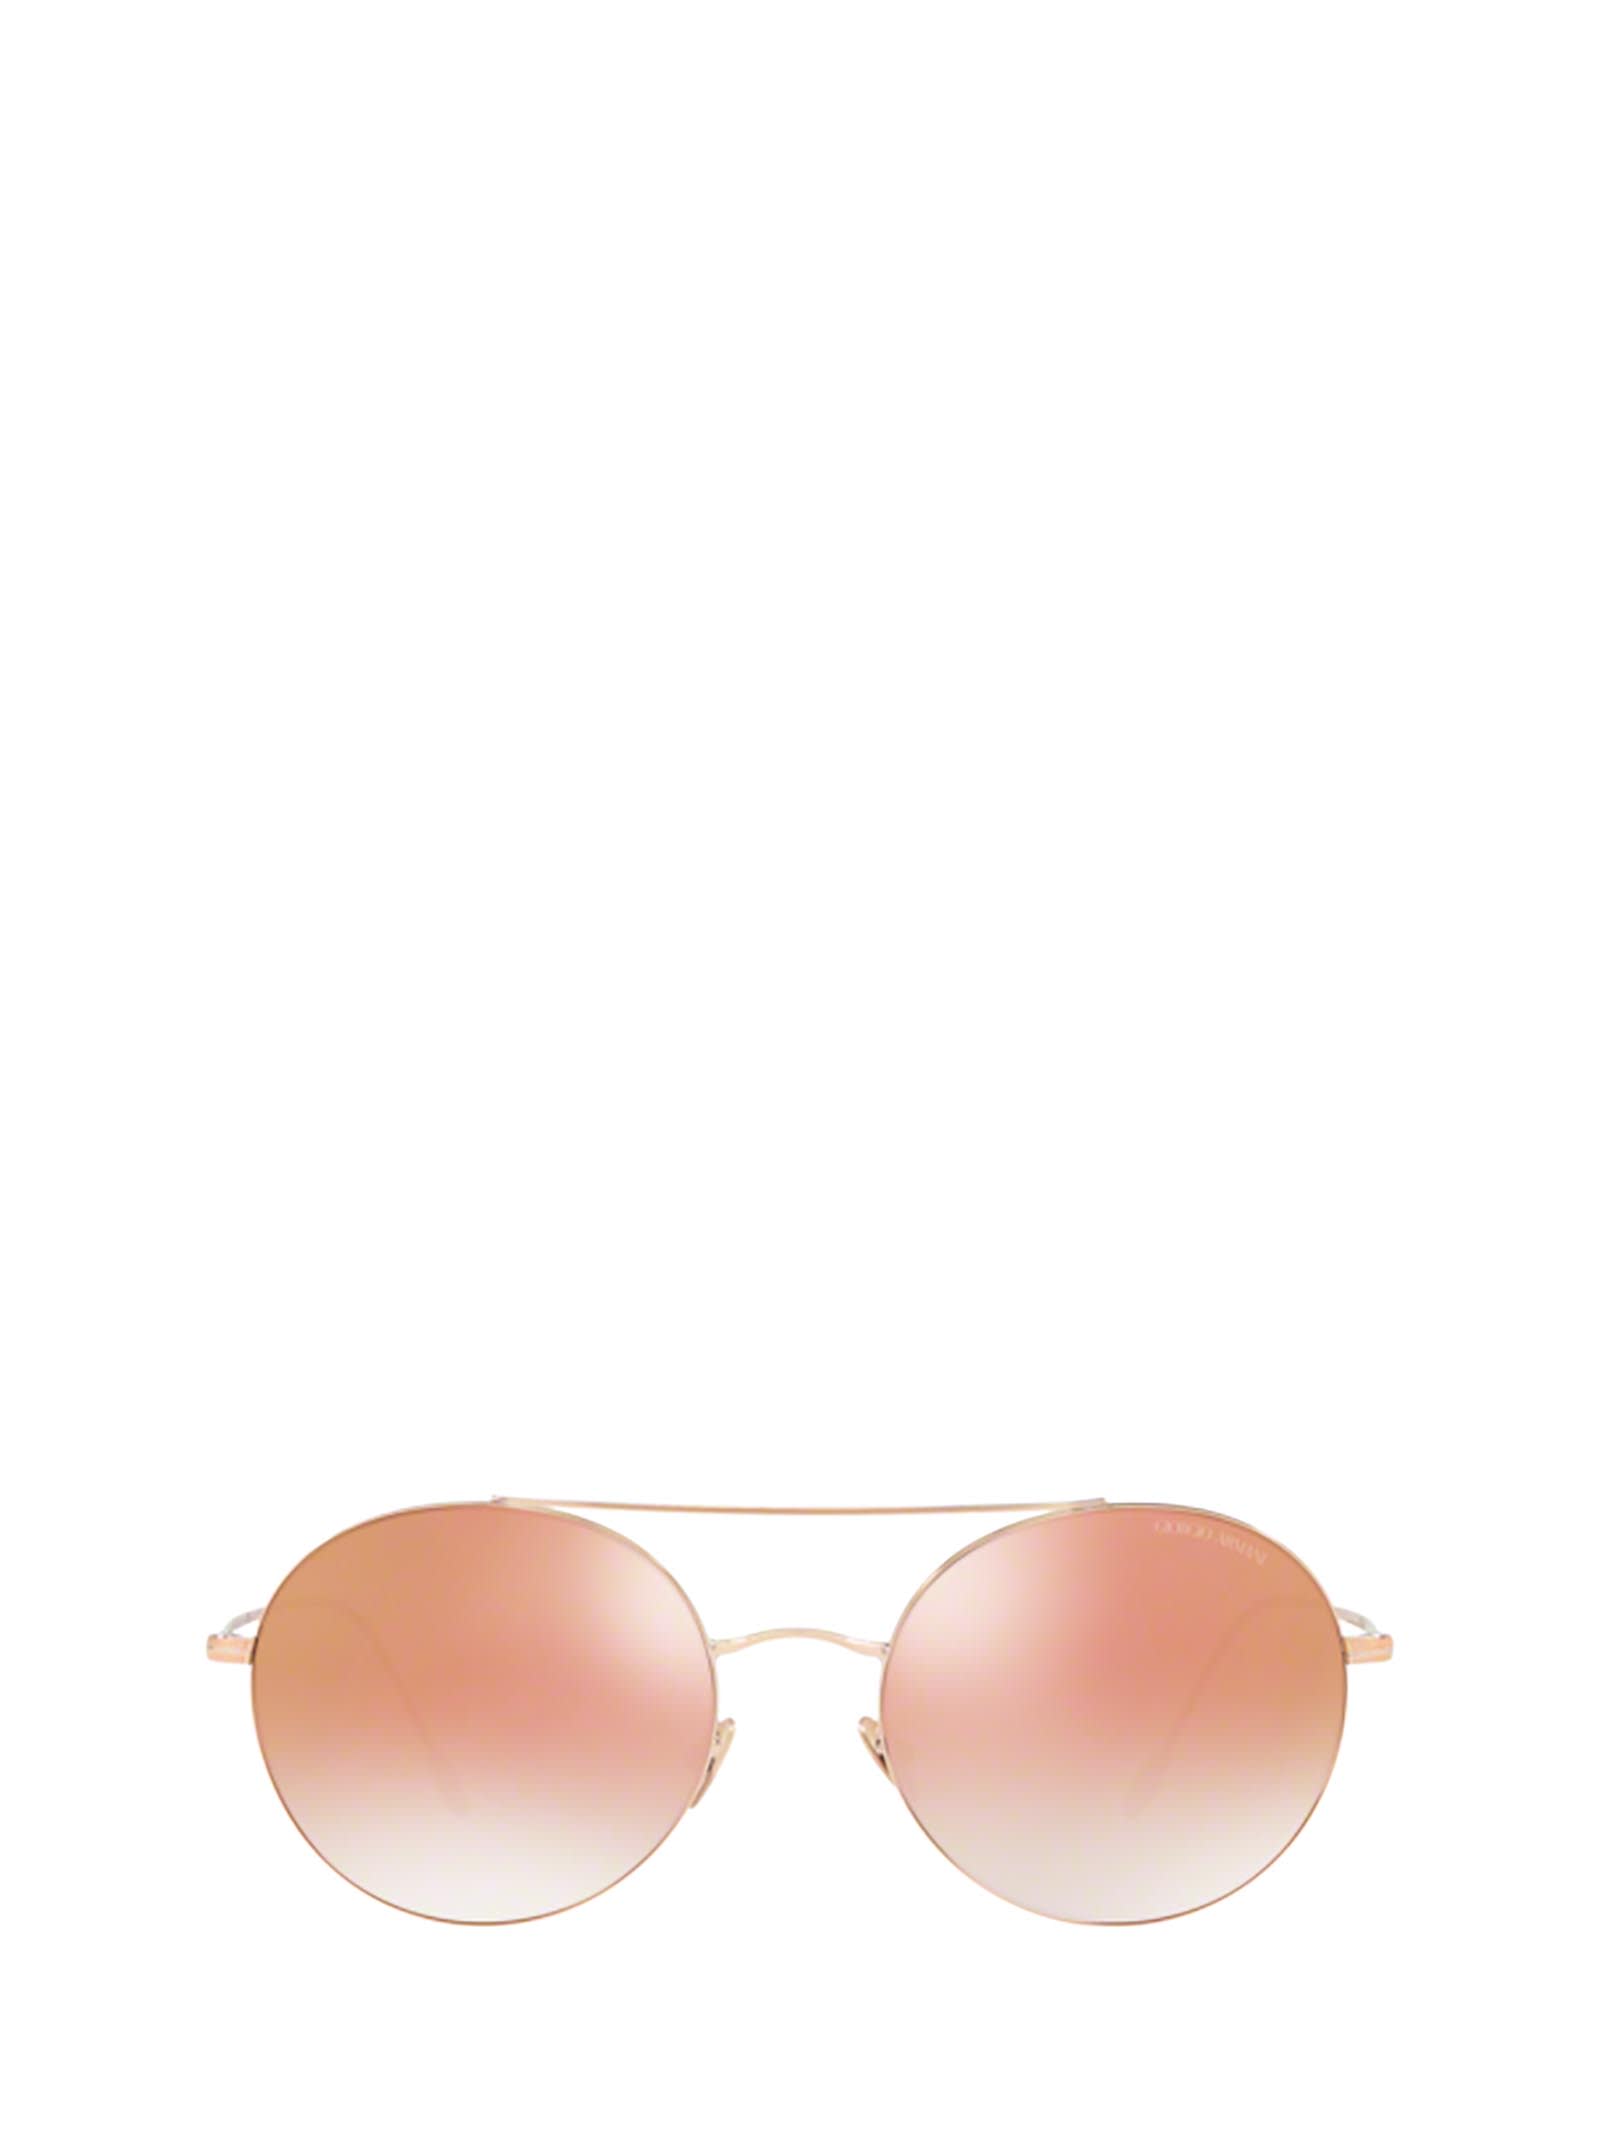 Giorgio Armani Ar6050 Bronze Sunglasses